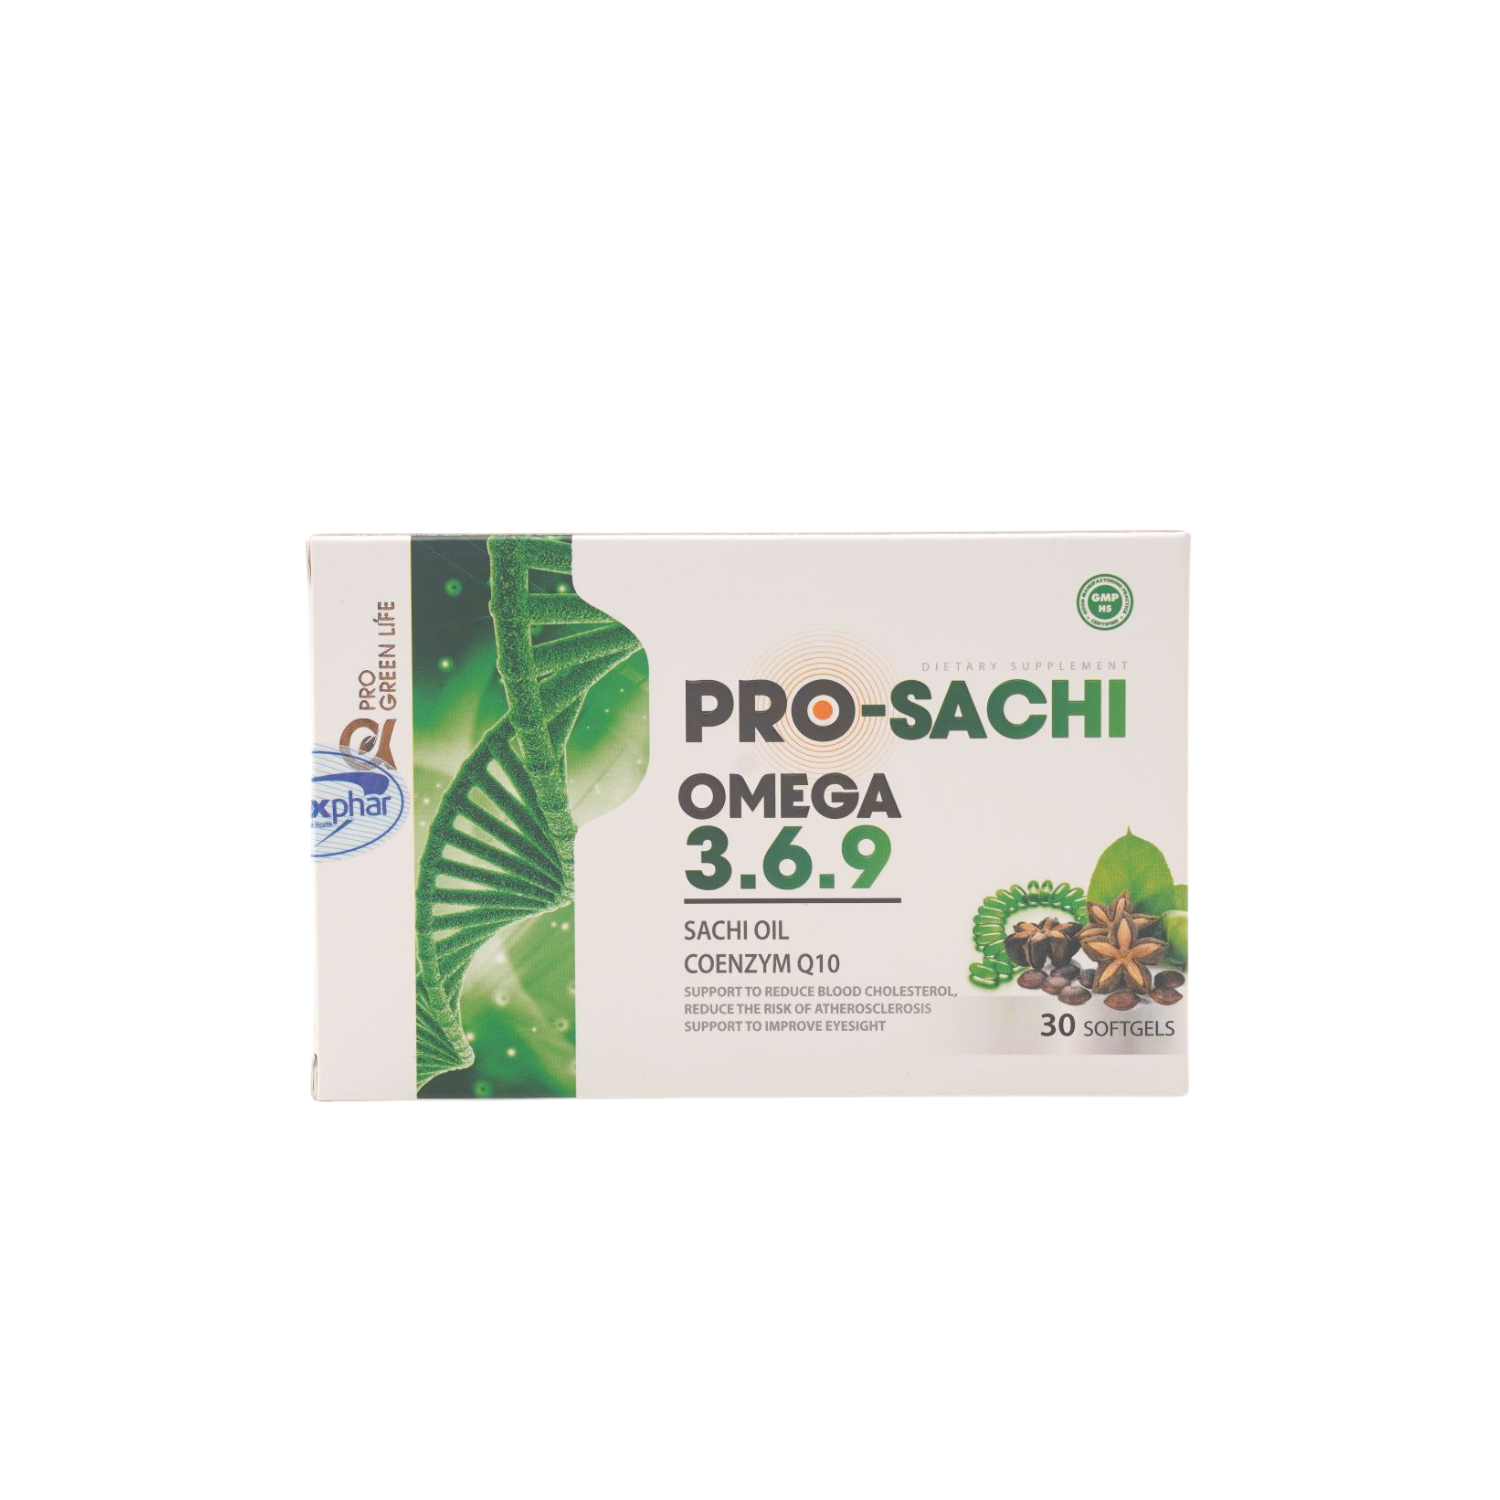  TPBVSK Pro-Sachi Omega 3.6.9 (Hộp 3 vỉ x 10 viên) 